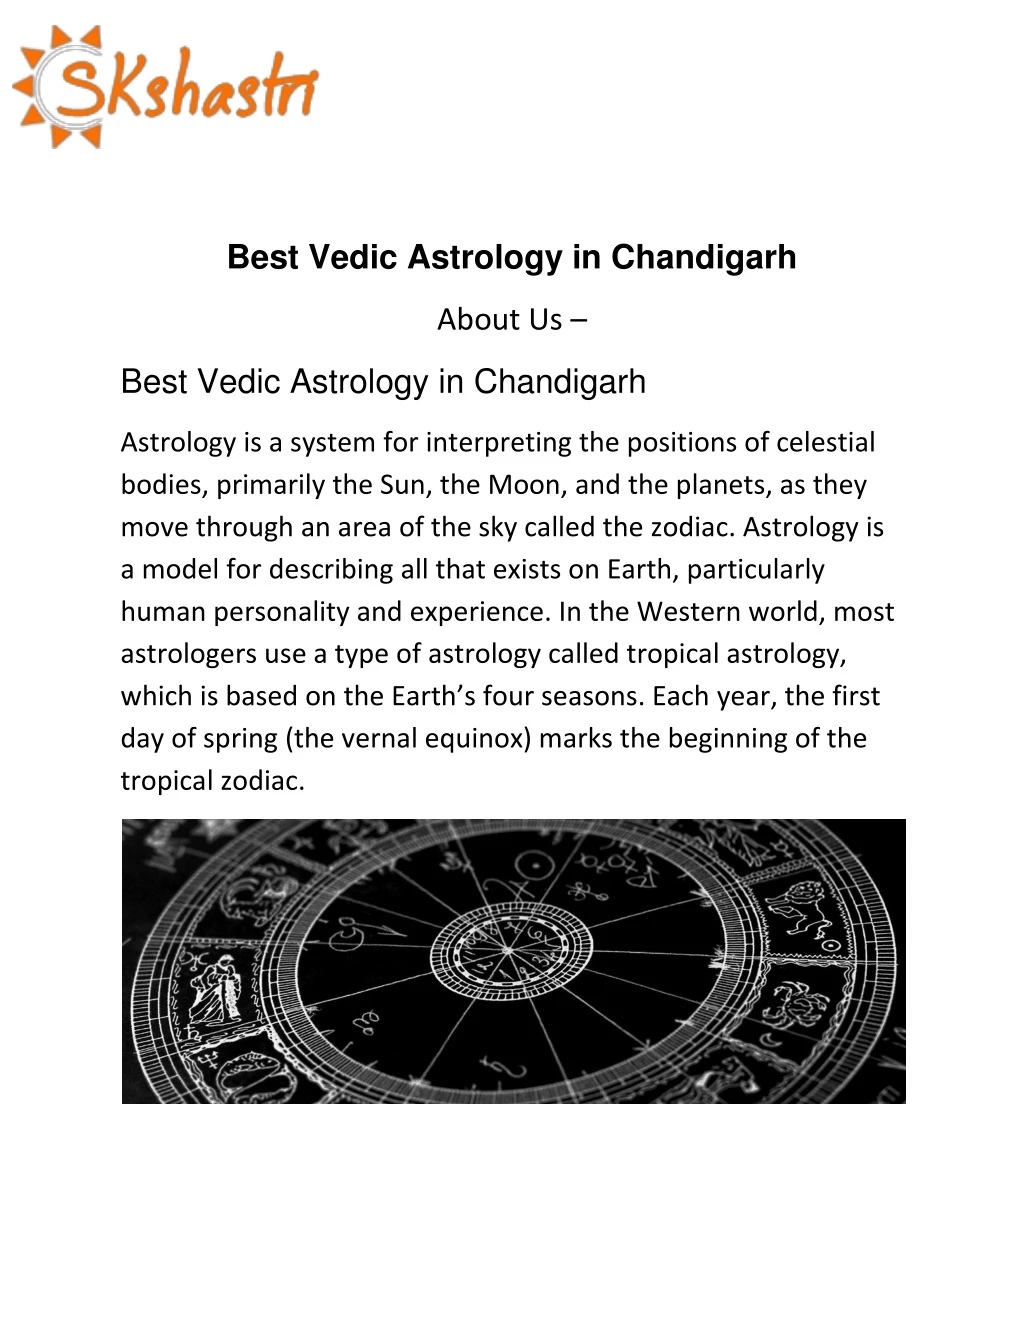 best vedic astrology in chandigarh